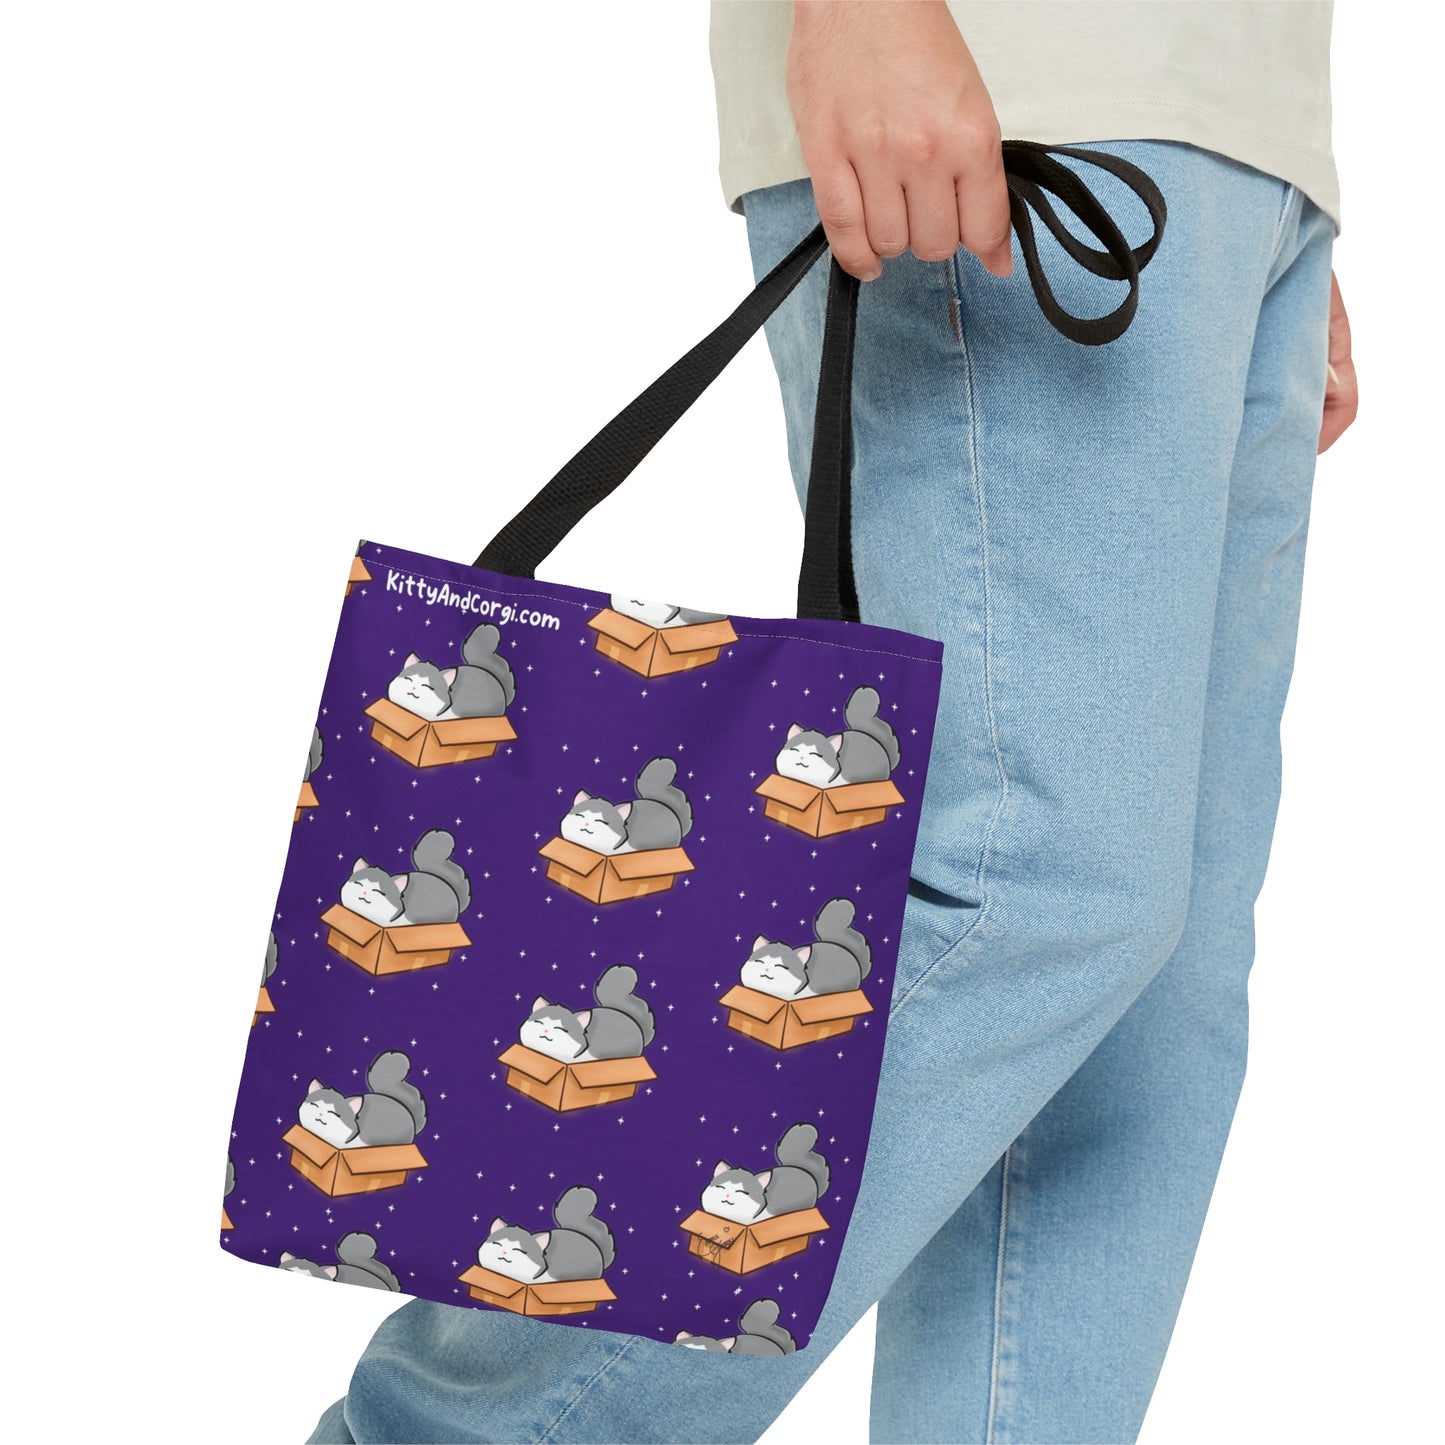 Kitty in a Box - Repeating Pattern in Dark Purple - Tote Bag (AOP)